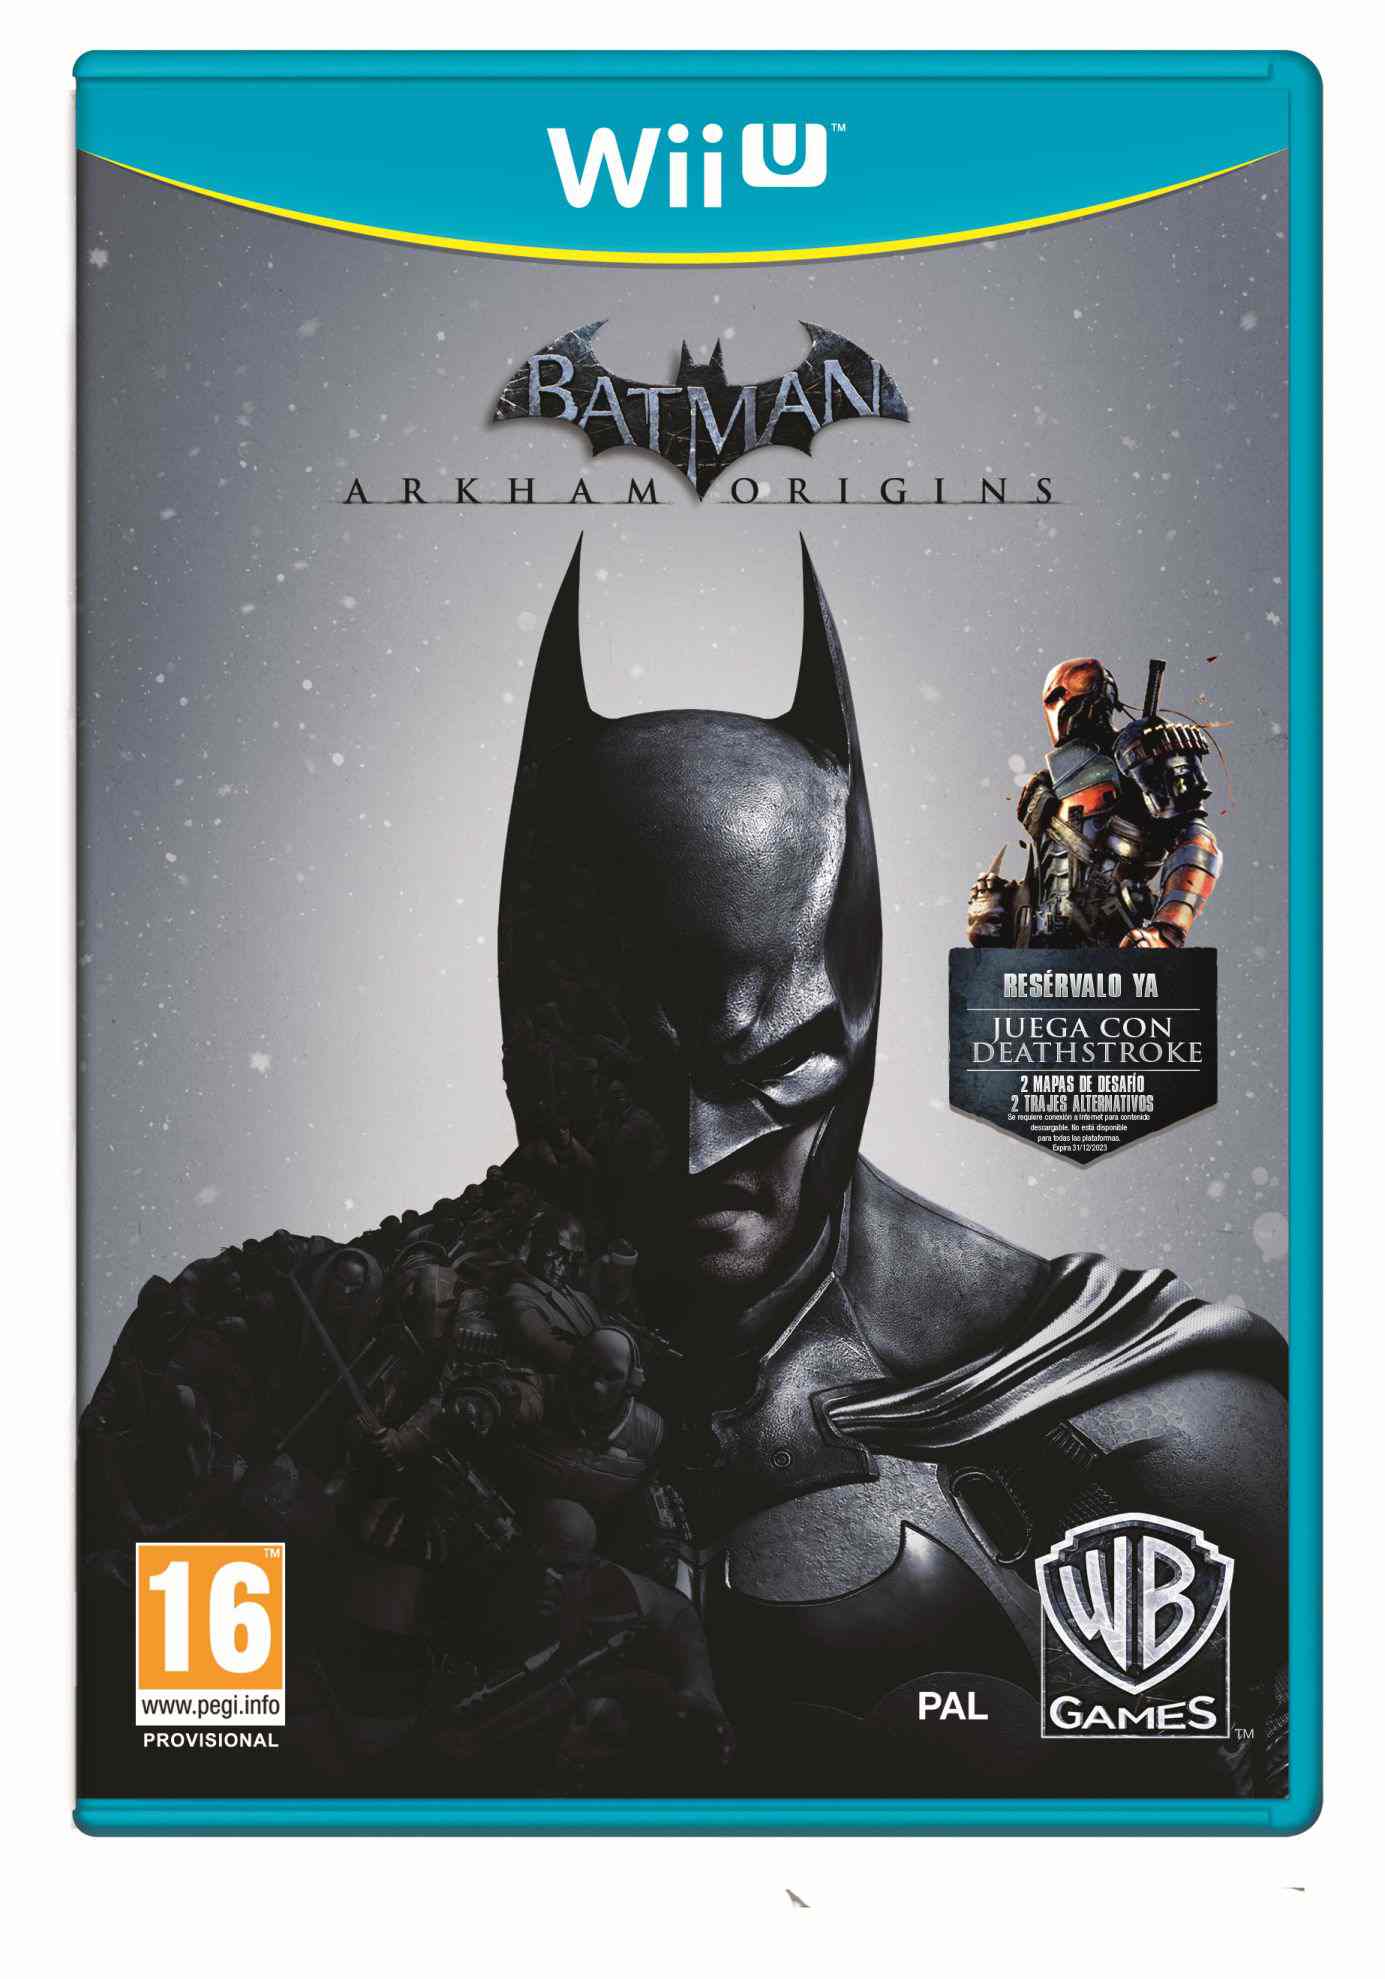 Batman Arkham Origins Wii U